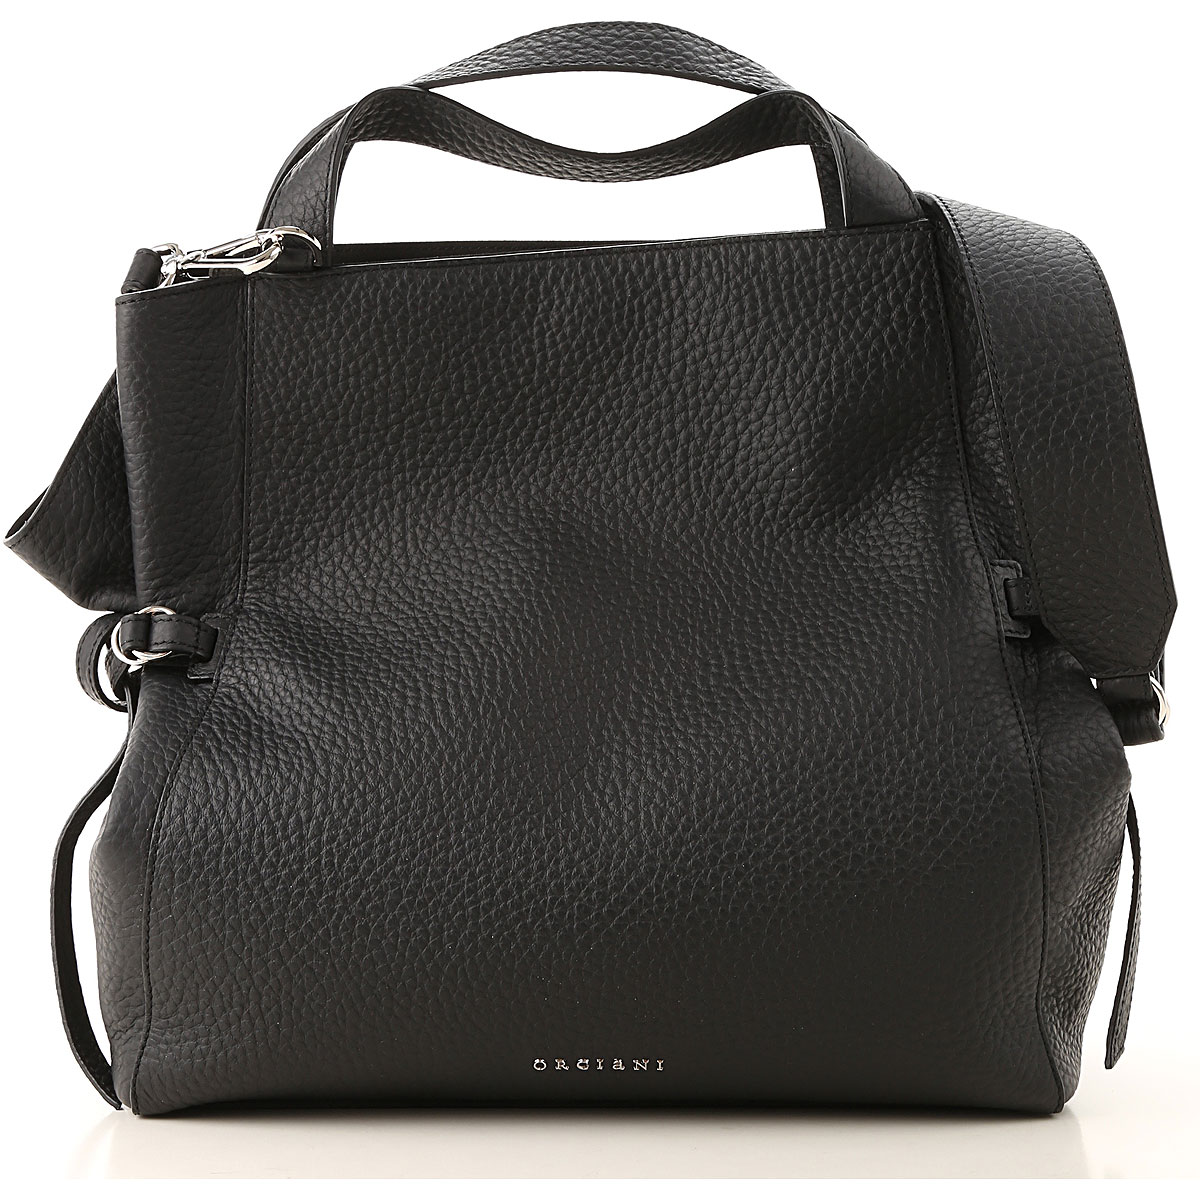 Handbags Orciani, Style code: b02047-soft-nero